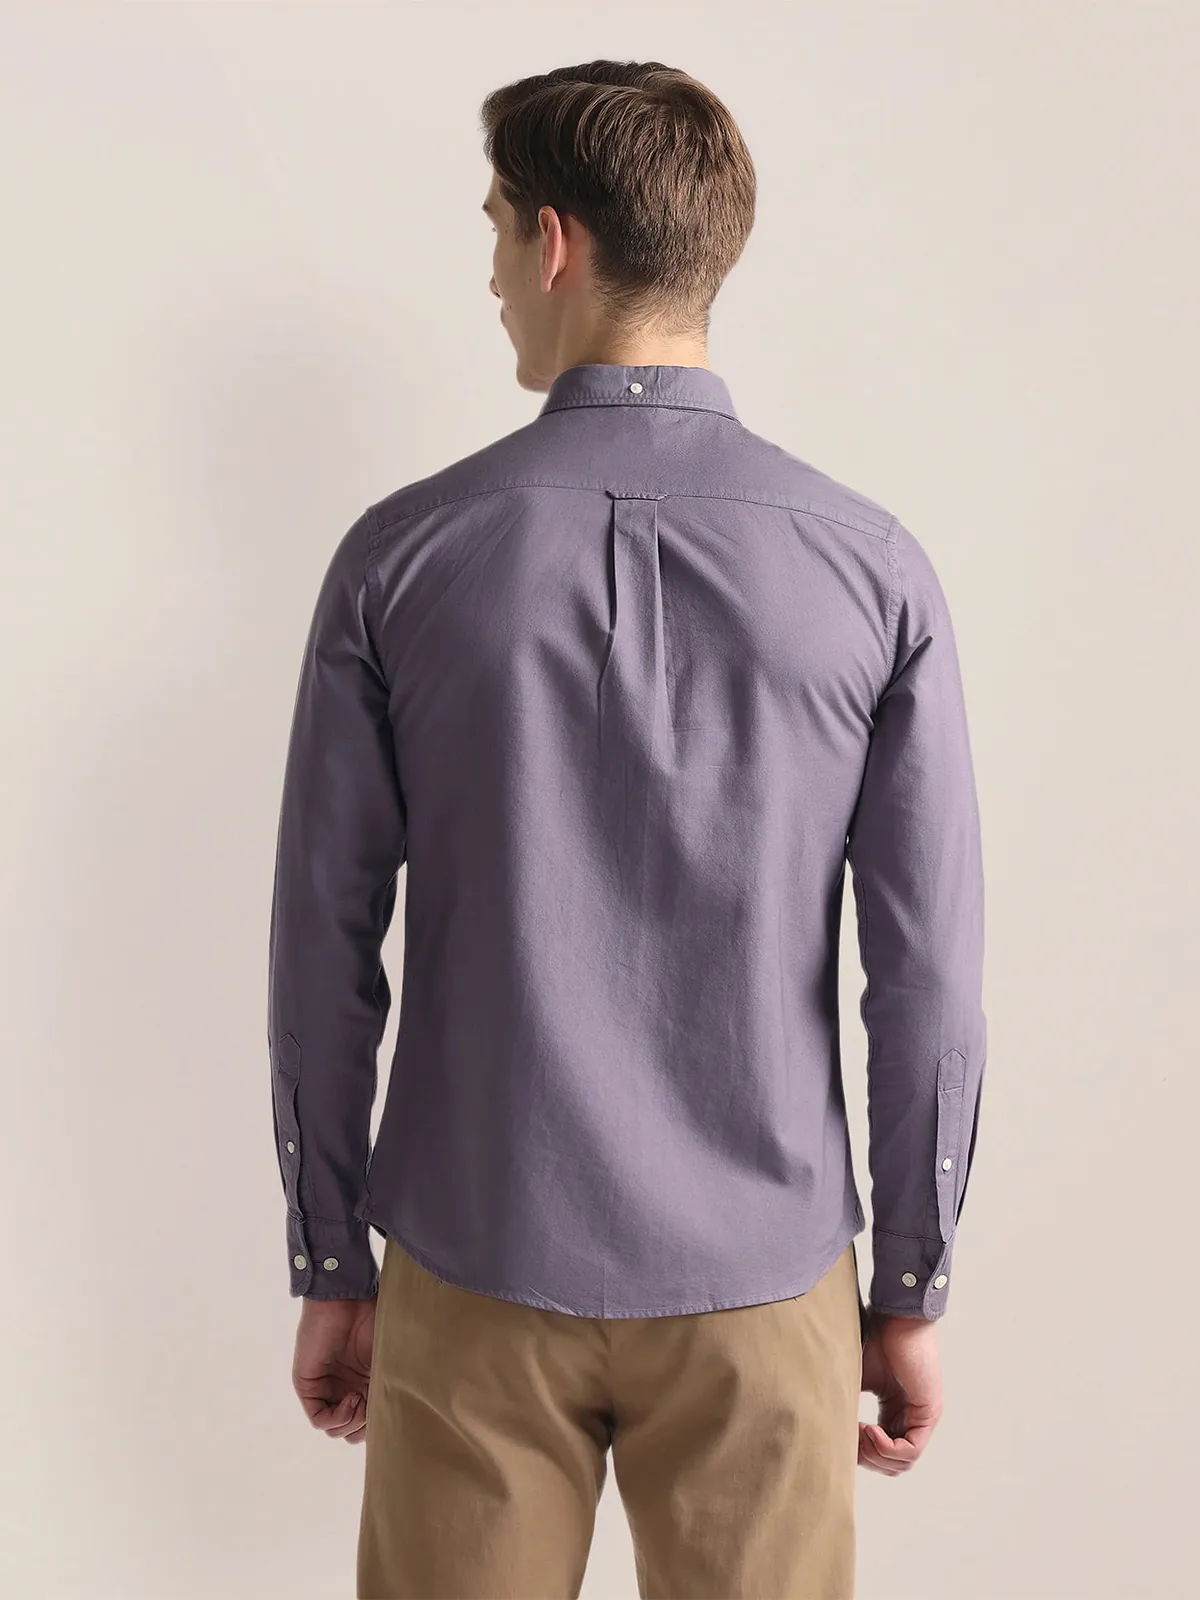 U S POLO ASSN purple plain cotton shirt